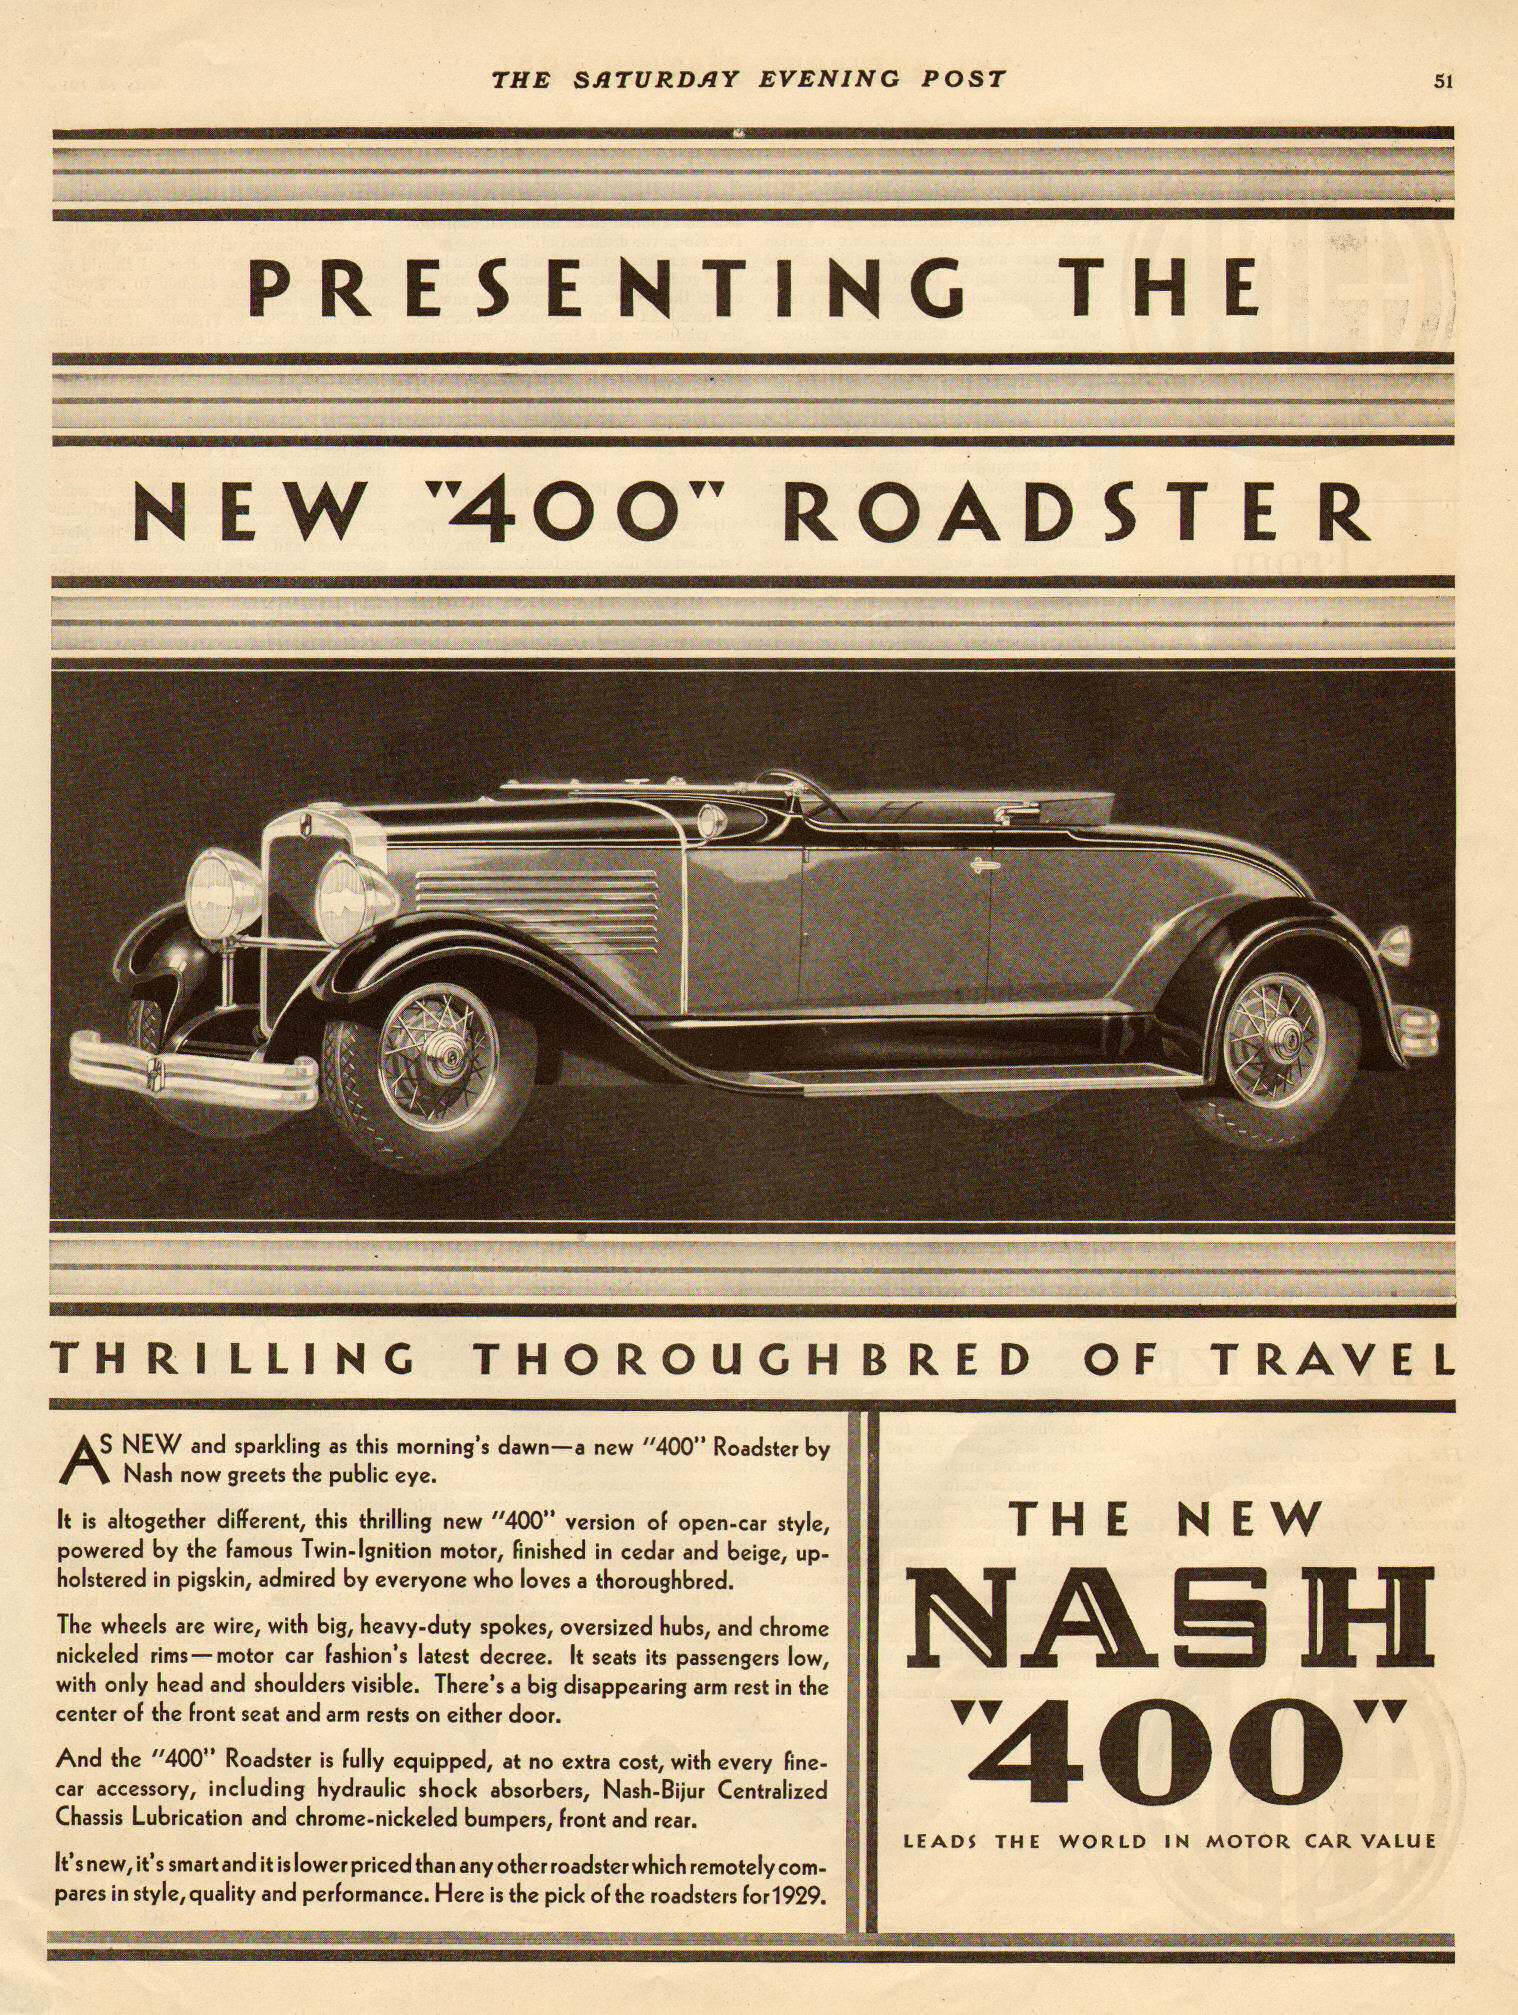 1929 Nash Auto Advertising